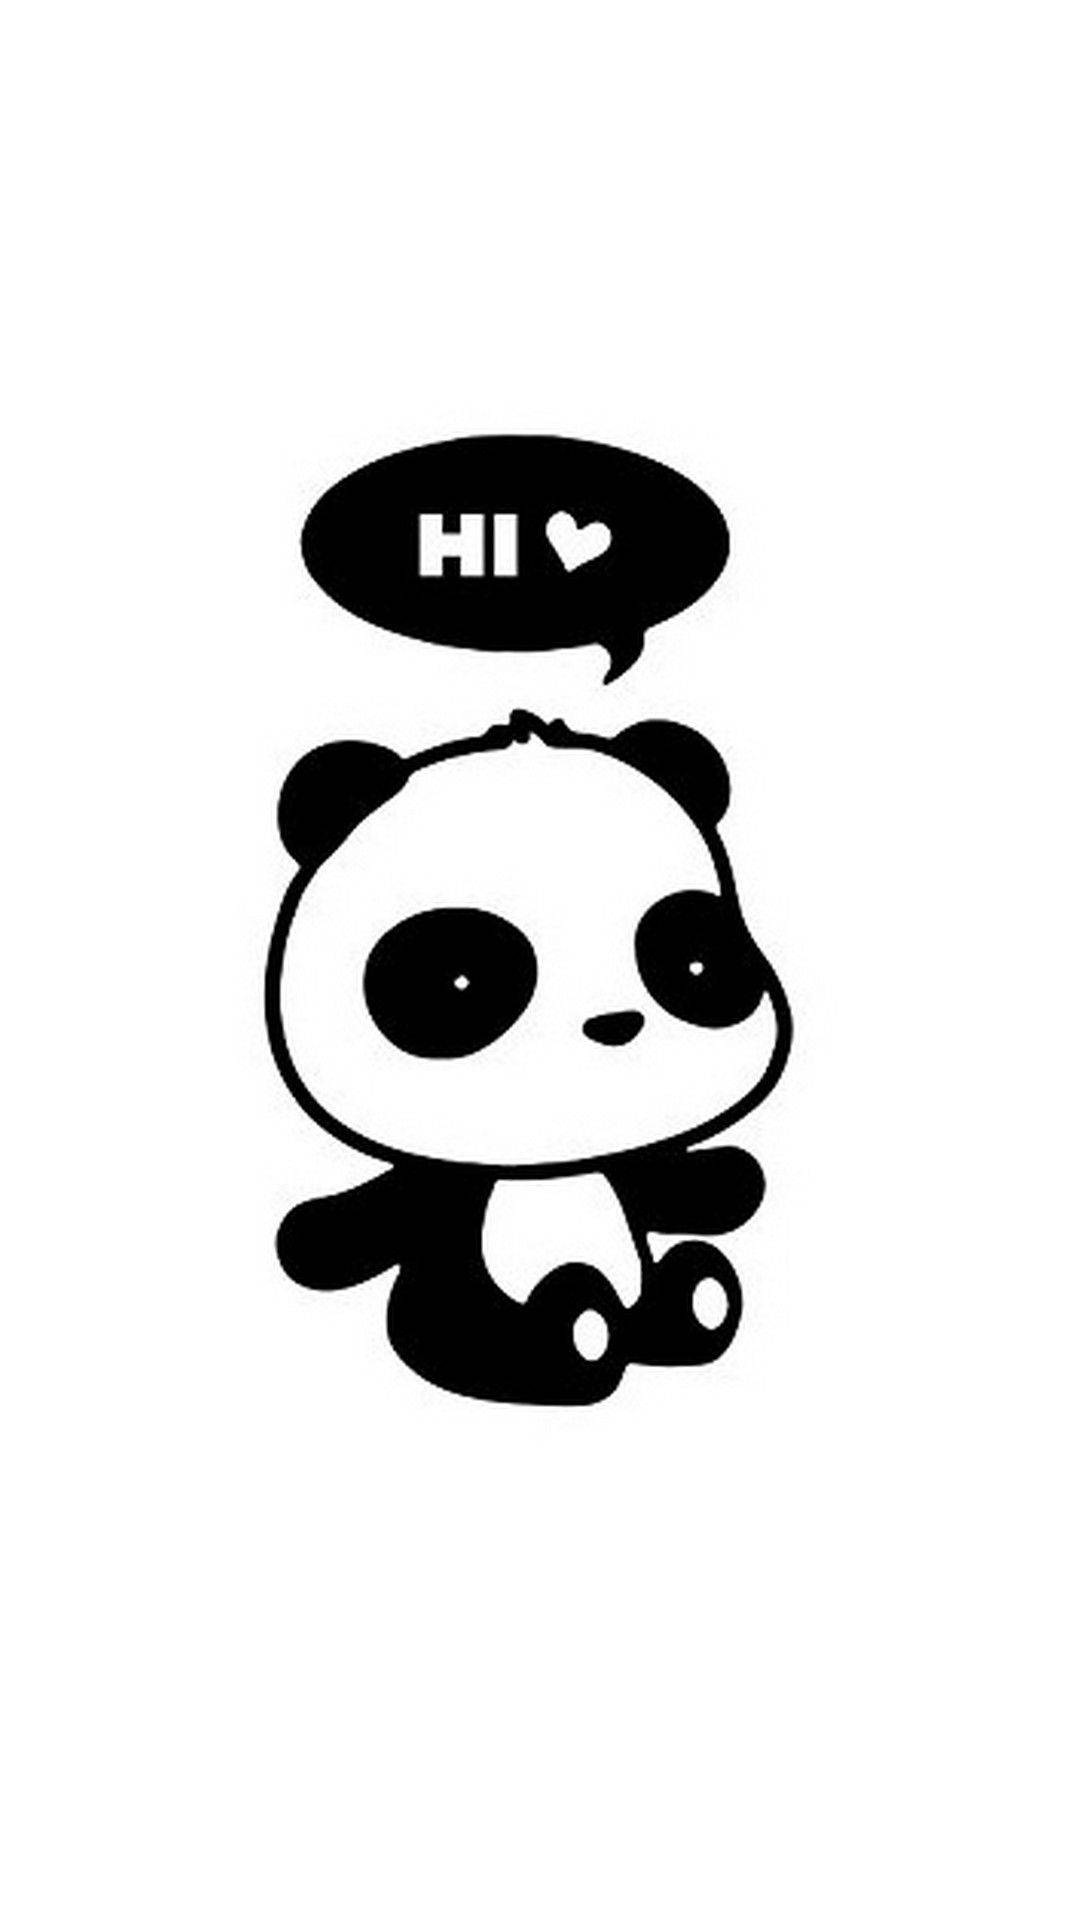 Cute Panda Saying Hi